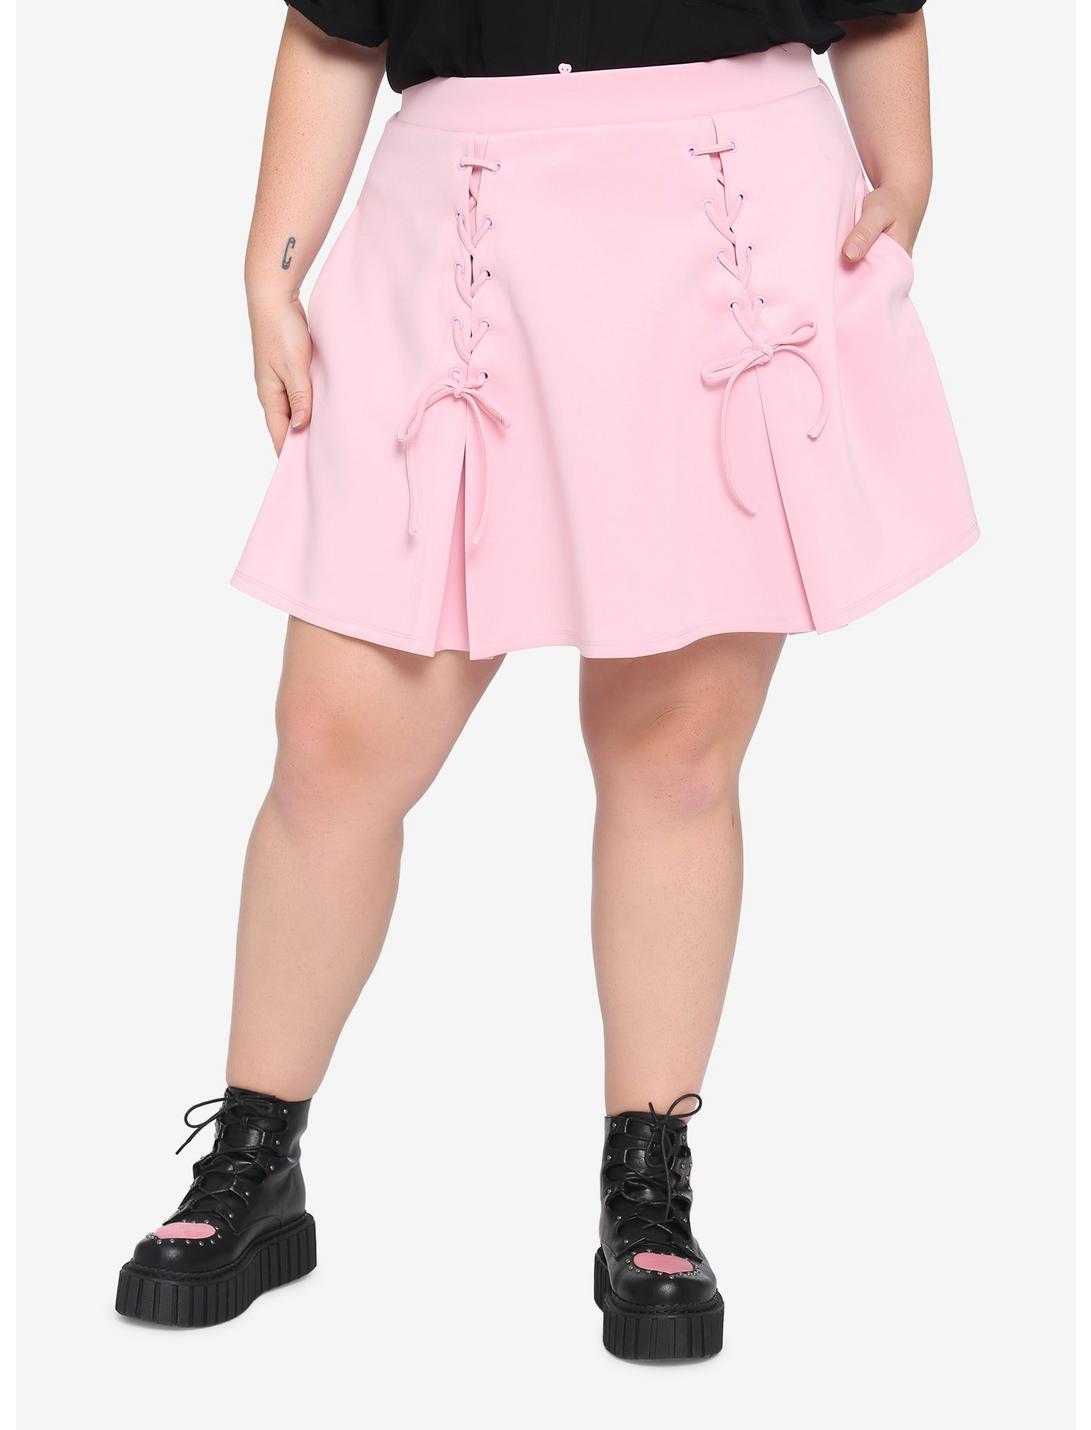 Pastel Pink Lace-Up Skirt Plus Size, PINK, hi-res